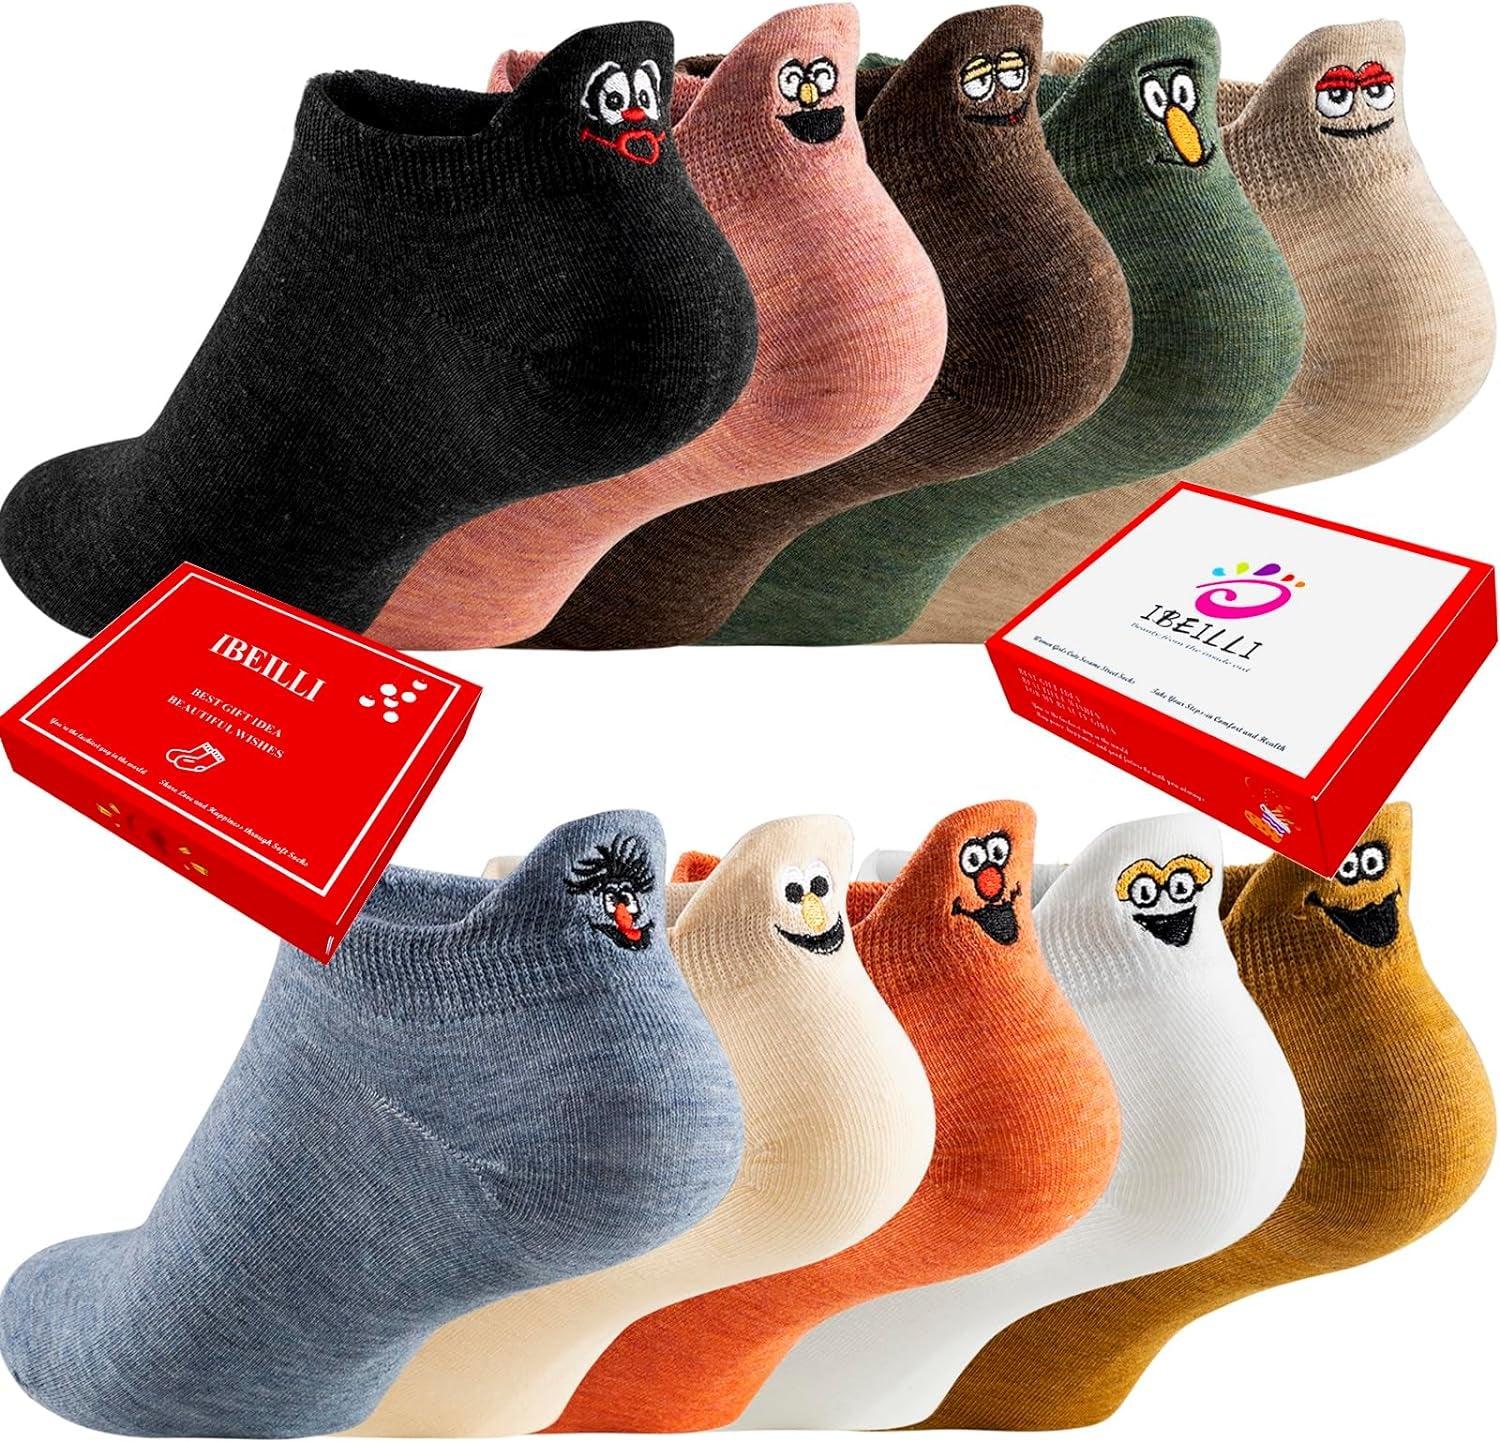 IBEILLI Women Cute Socks 10 Pairs Cotton Kawaii Embroidered Funny Low Cut Socks for Women Girls Ankle Socks